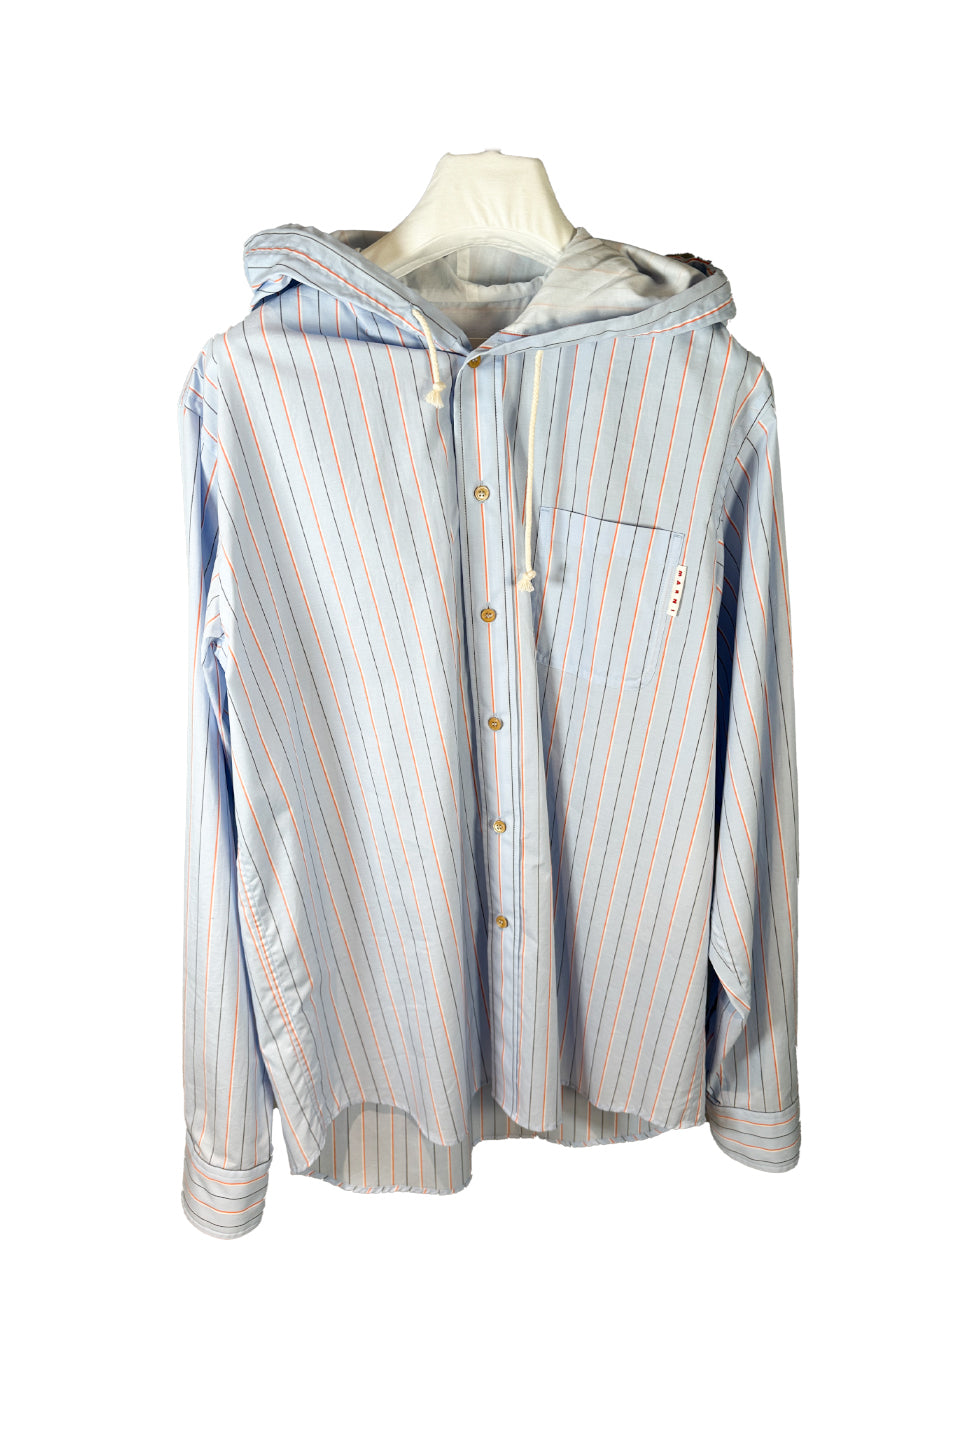 Marni | Stripe Hooded Shirt 長袖 オーバーシャツ ロゴ マルニ – Luciall